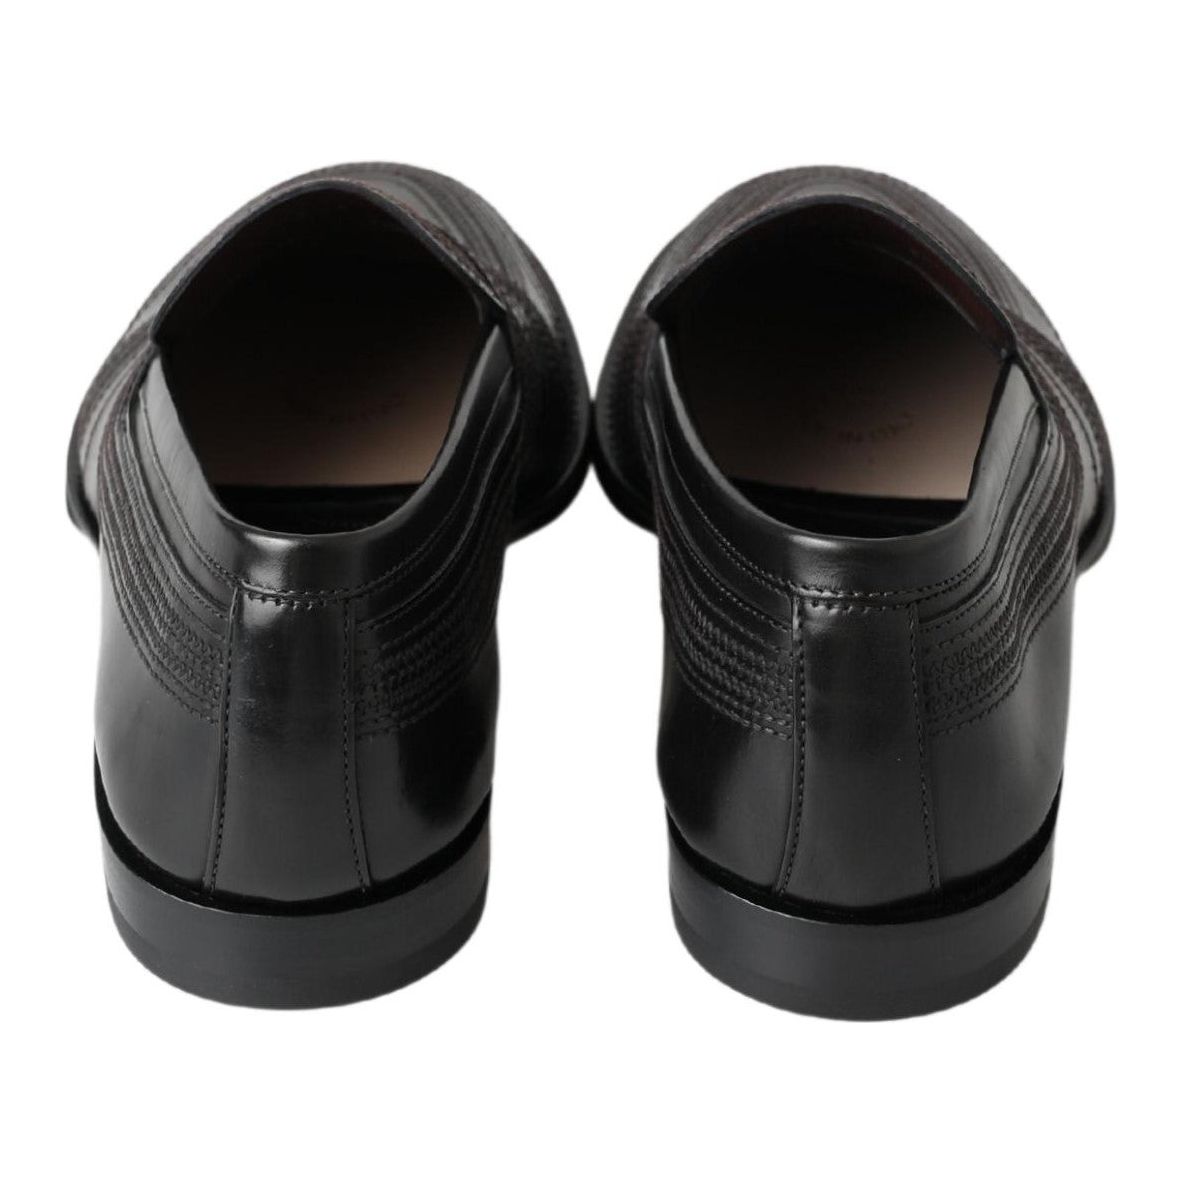 Dolce & Gabbana Elegant Black Leather Slipper Loafers black-leather-slipper-loafers-stitched-shoes